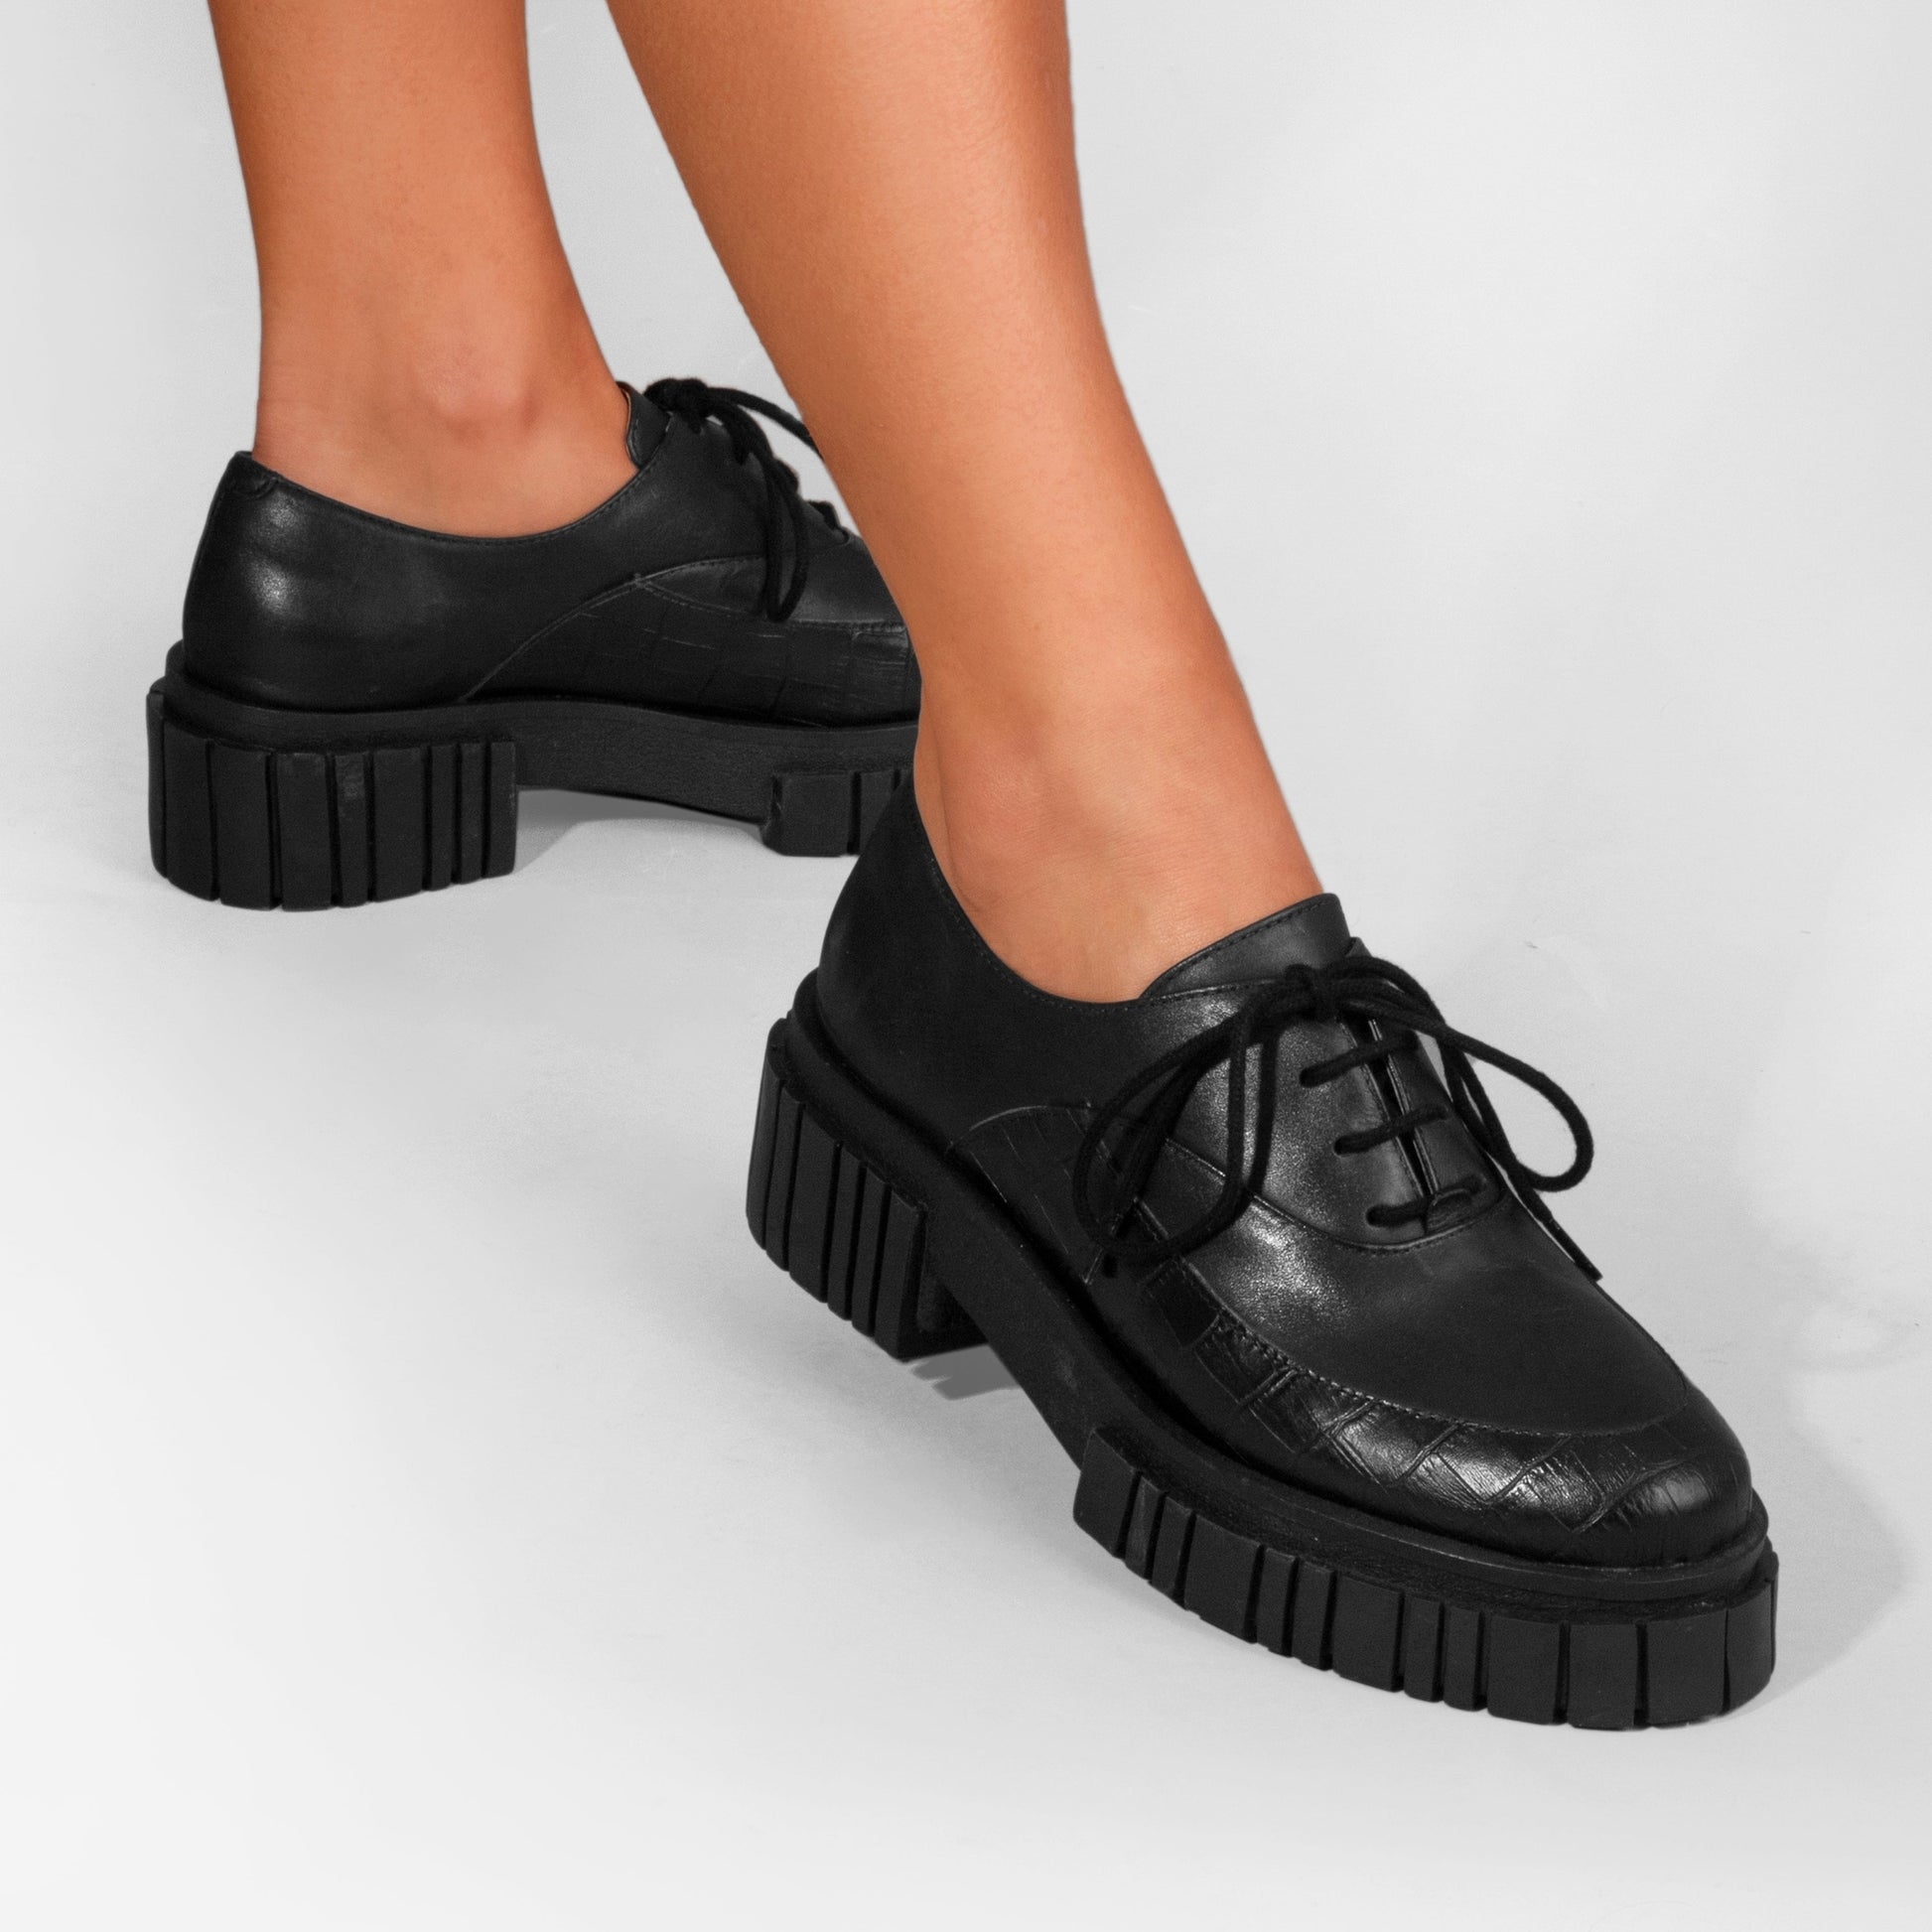 Vinci Shoes Betina Black Oxfords